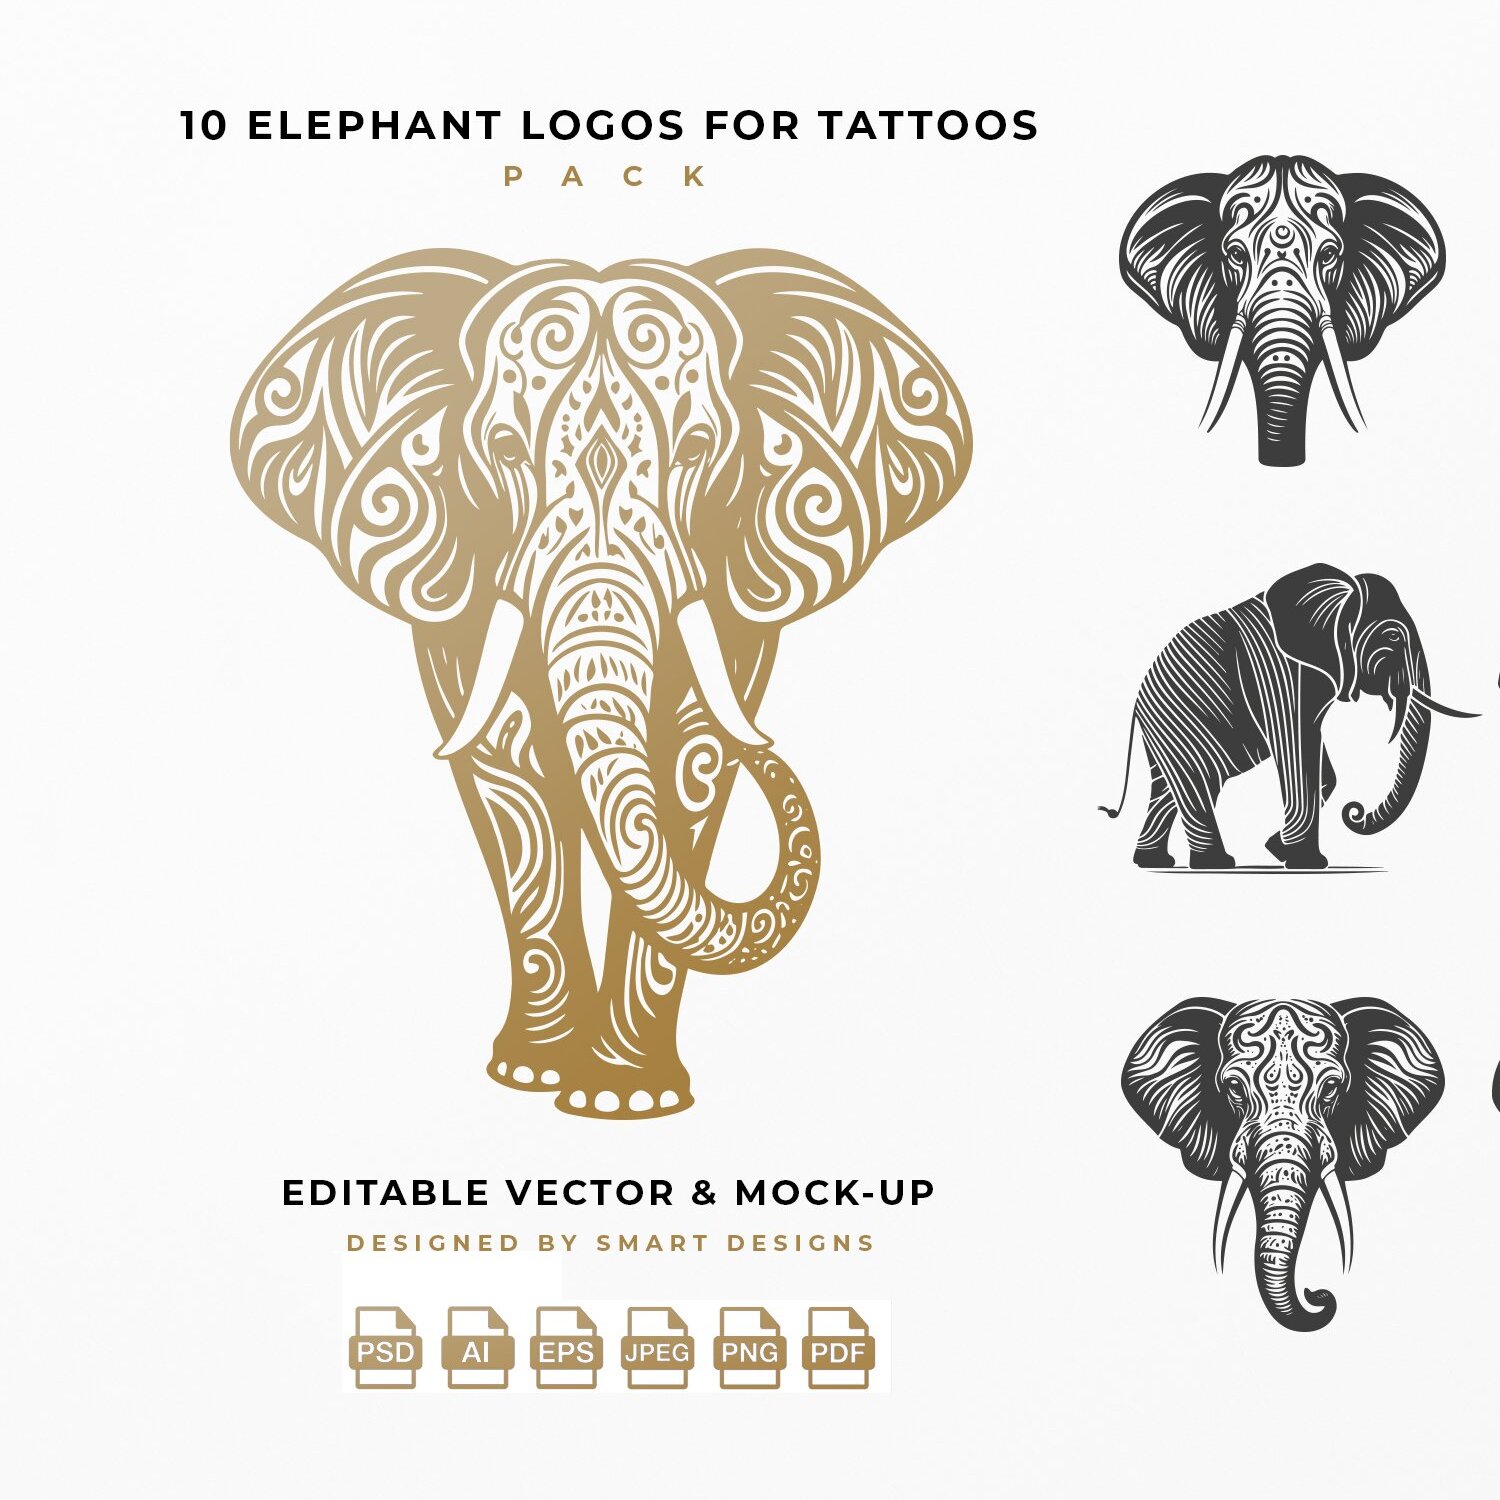 elephant logos for tattoos pack x10 1 666